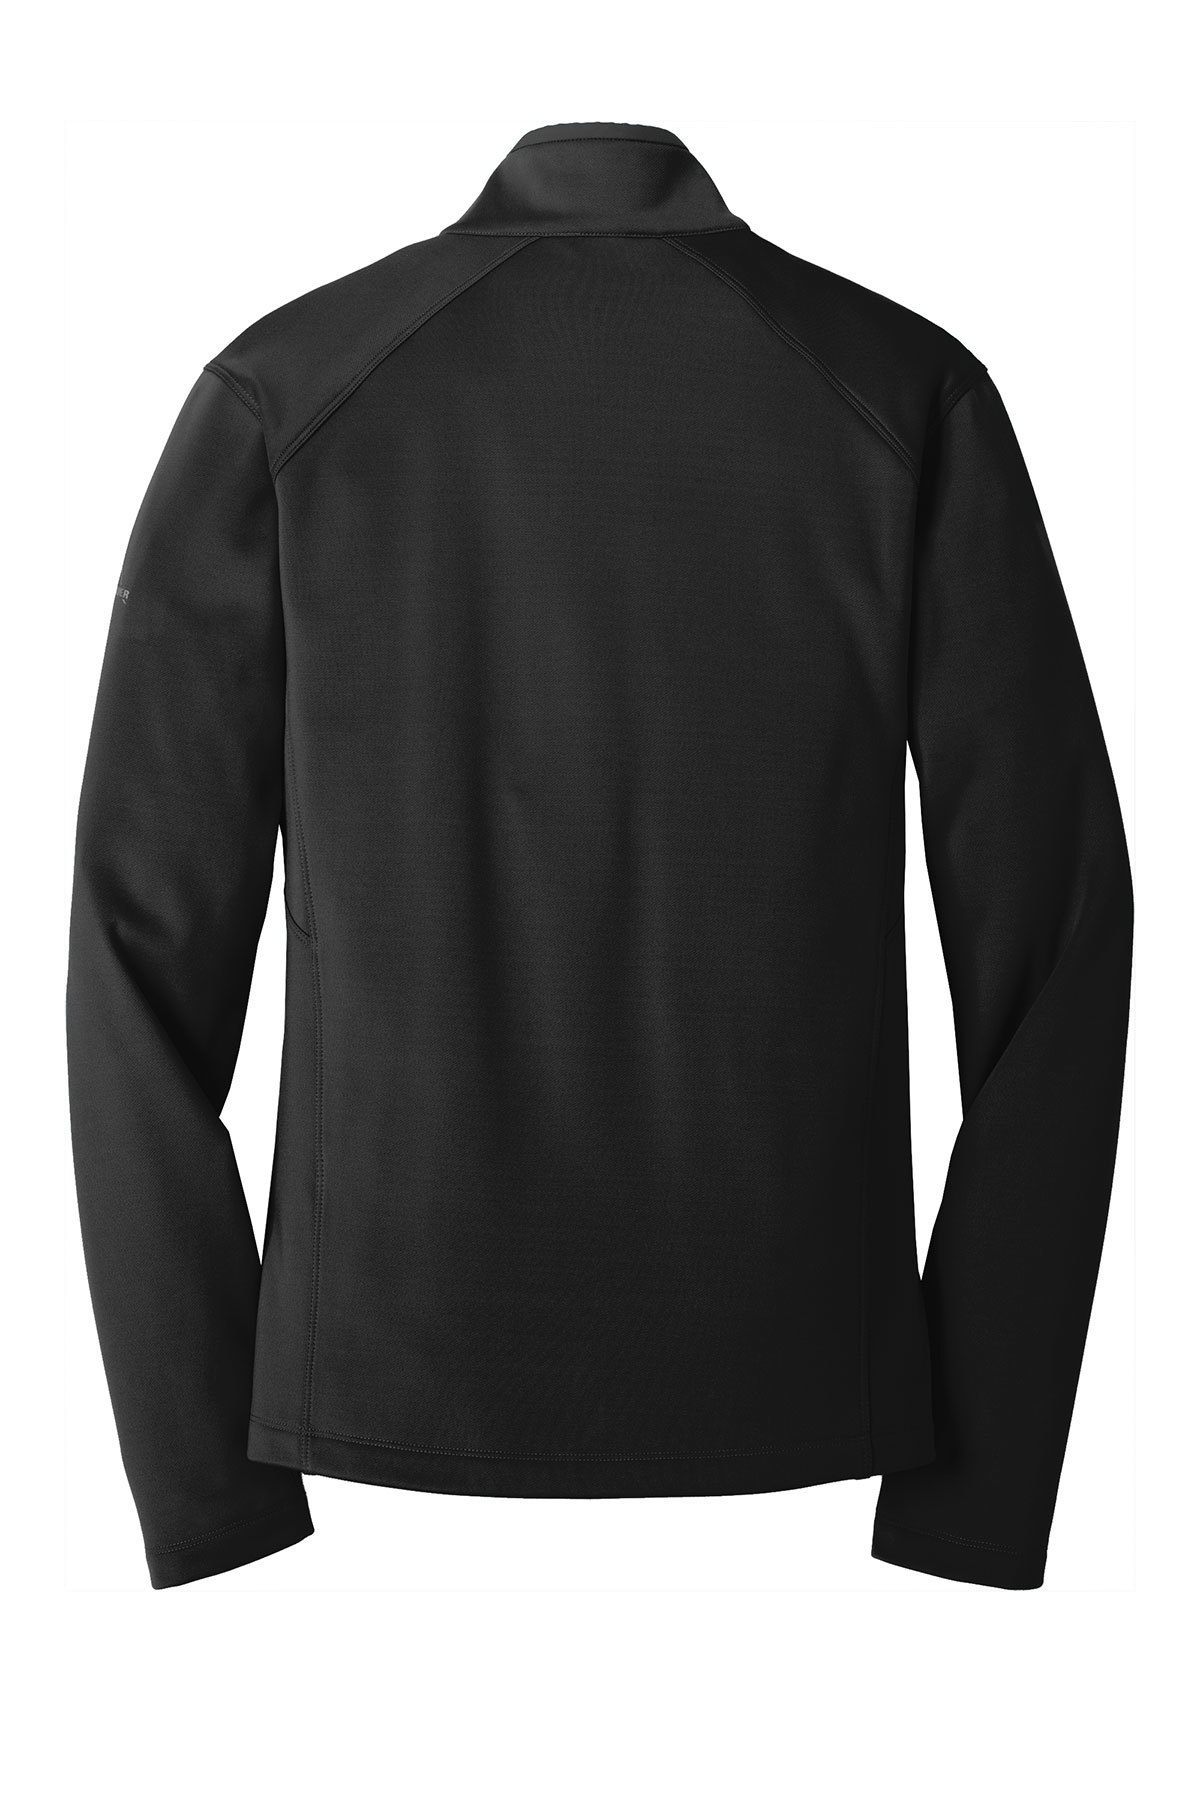 Eddie Bauer Highpoint Fleece Jacket, Product